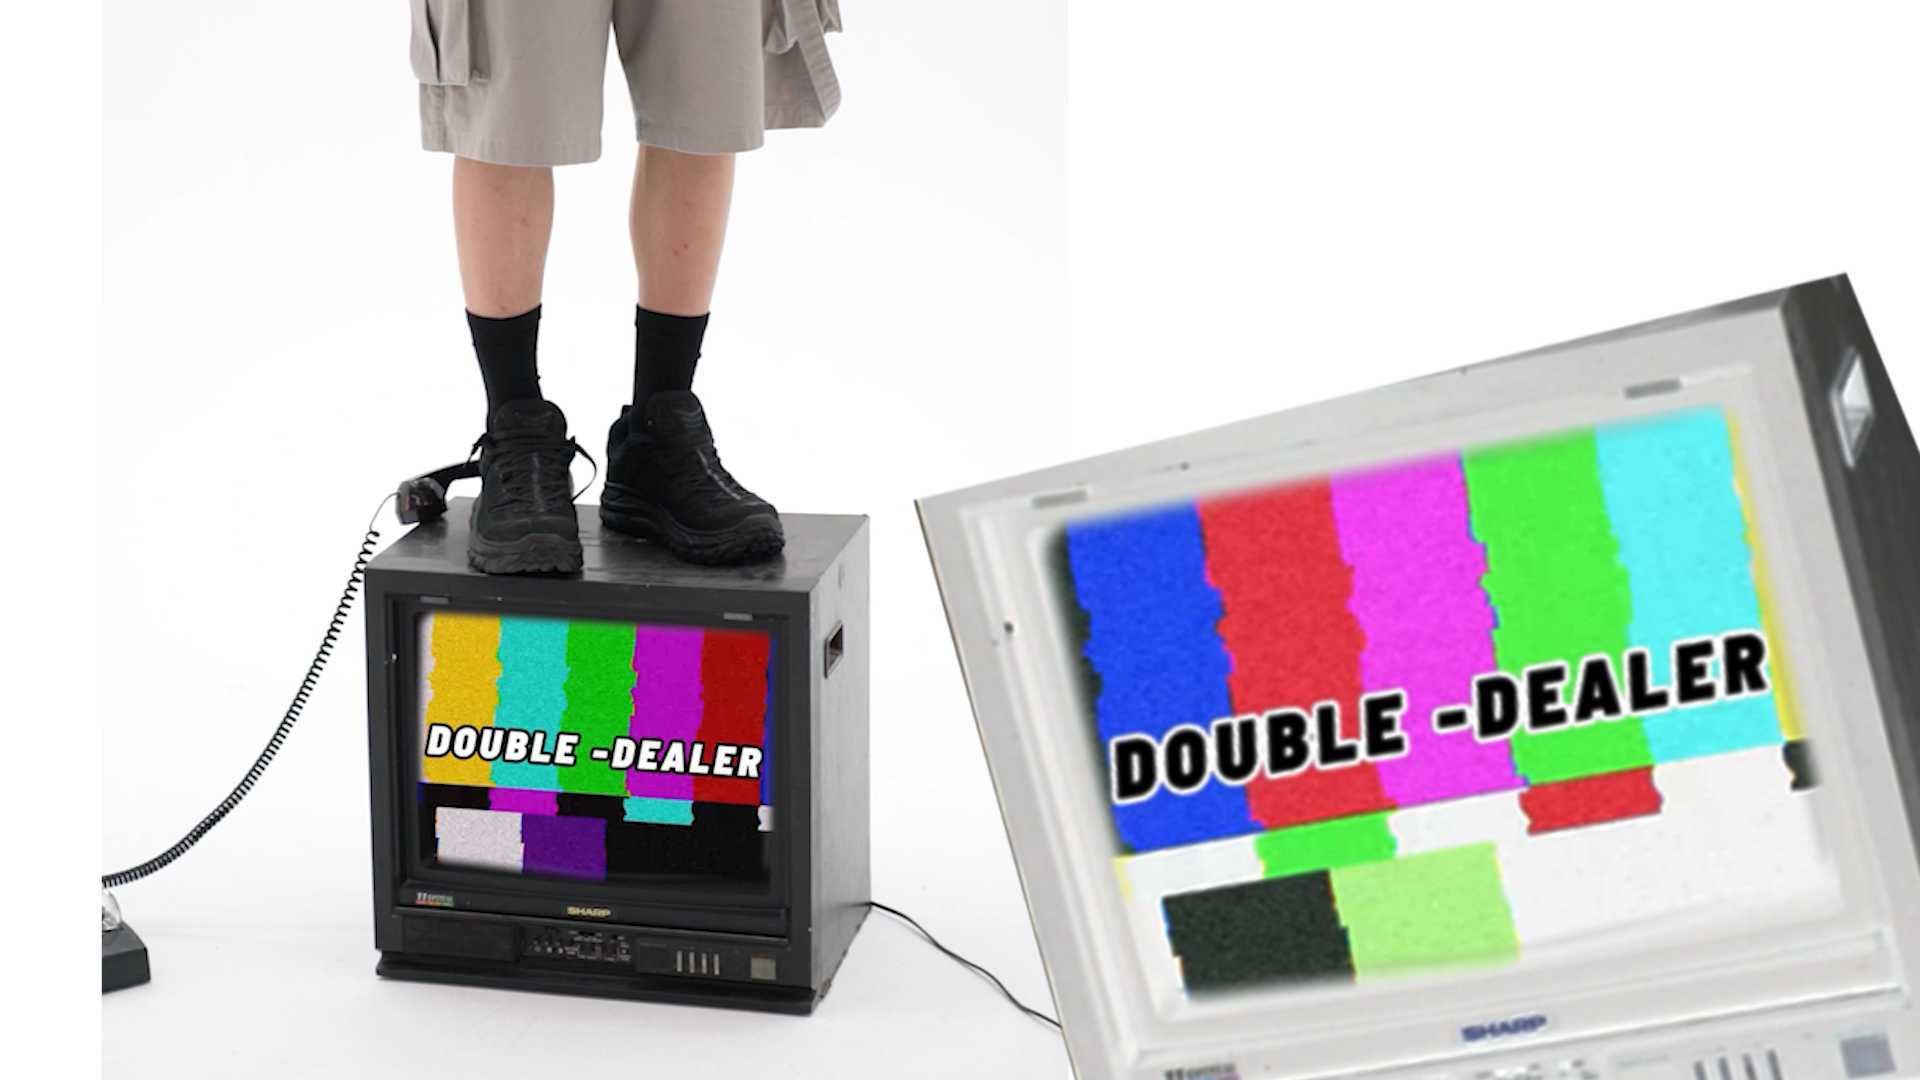 DOUBLE-DEALER 2020 春夏季新品首发宣传片